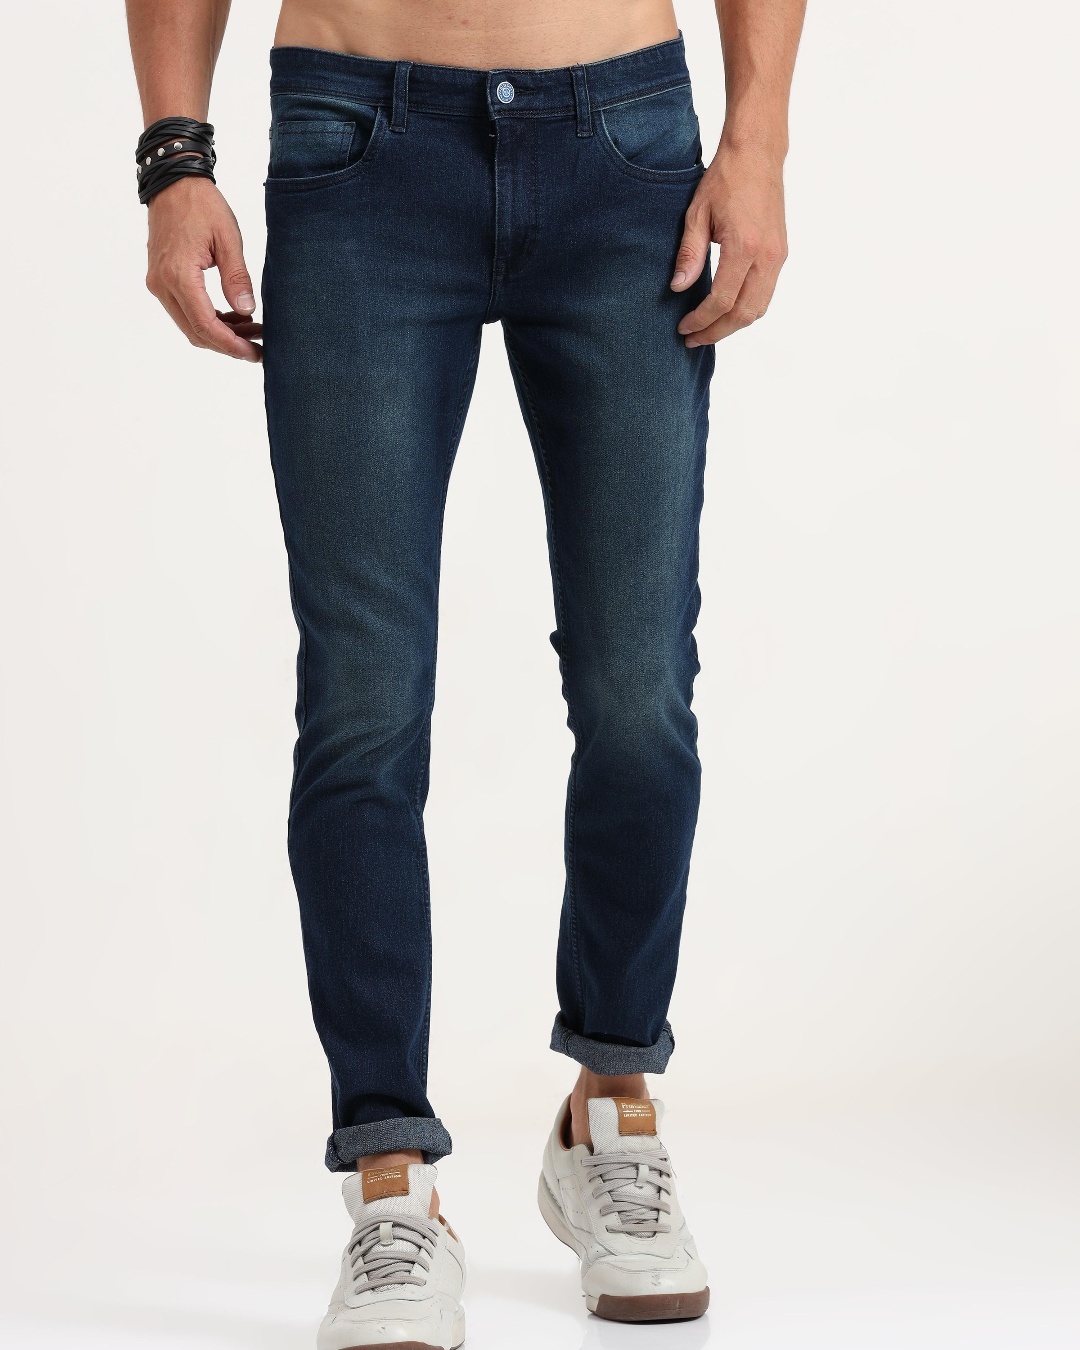 Buy Men's Blue Washed Skinny Fit Jeans Online at Bewakoof